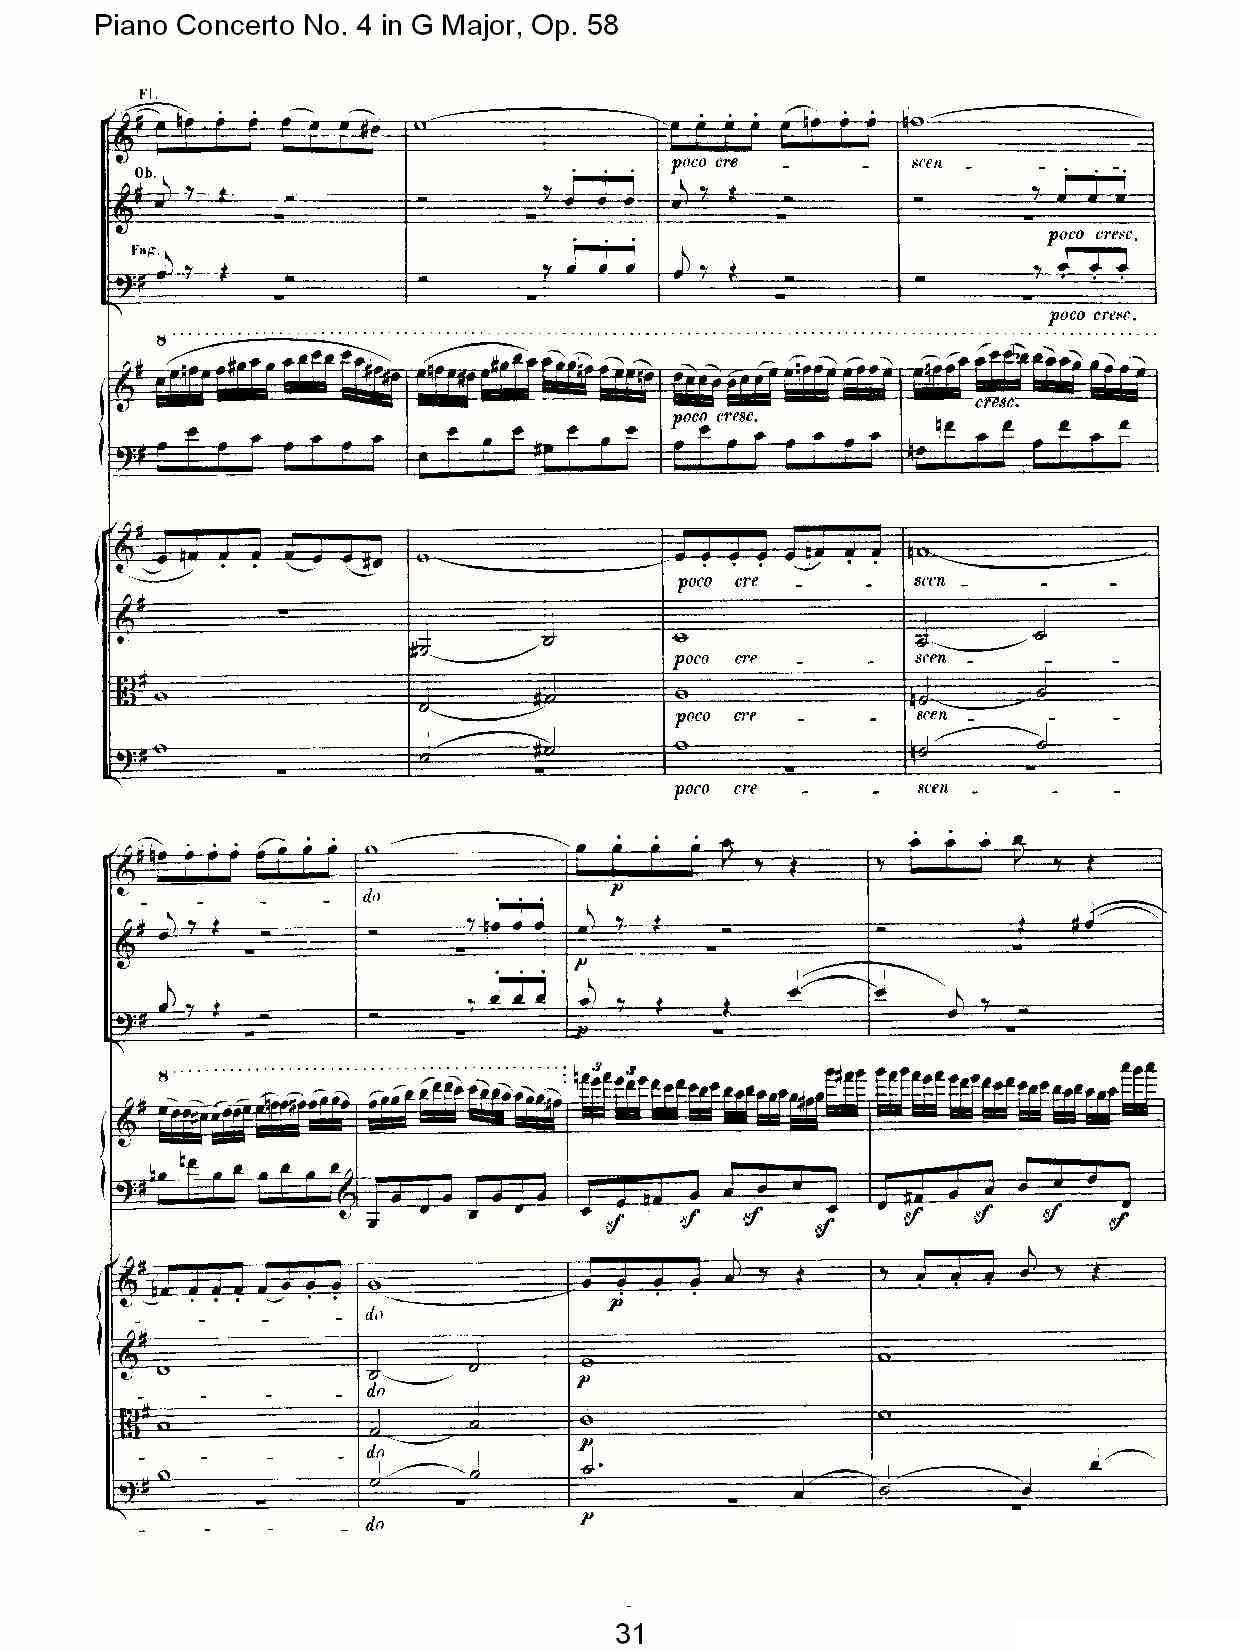 Ｇ大调钢琴第四协奏曲 Op.58 第一乐章钢琴曲谱（图31）